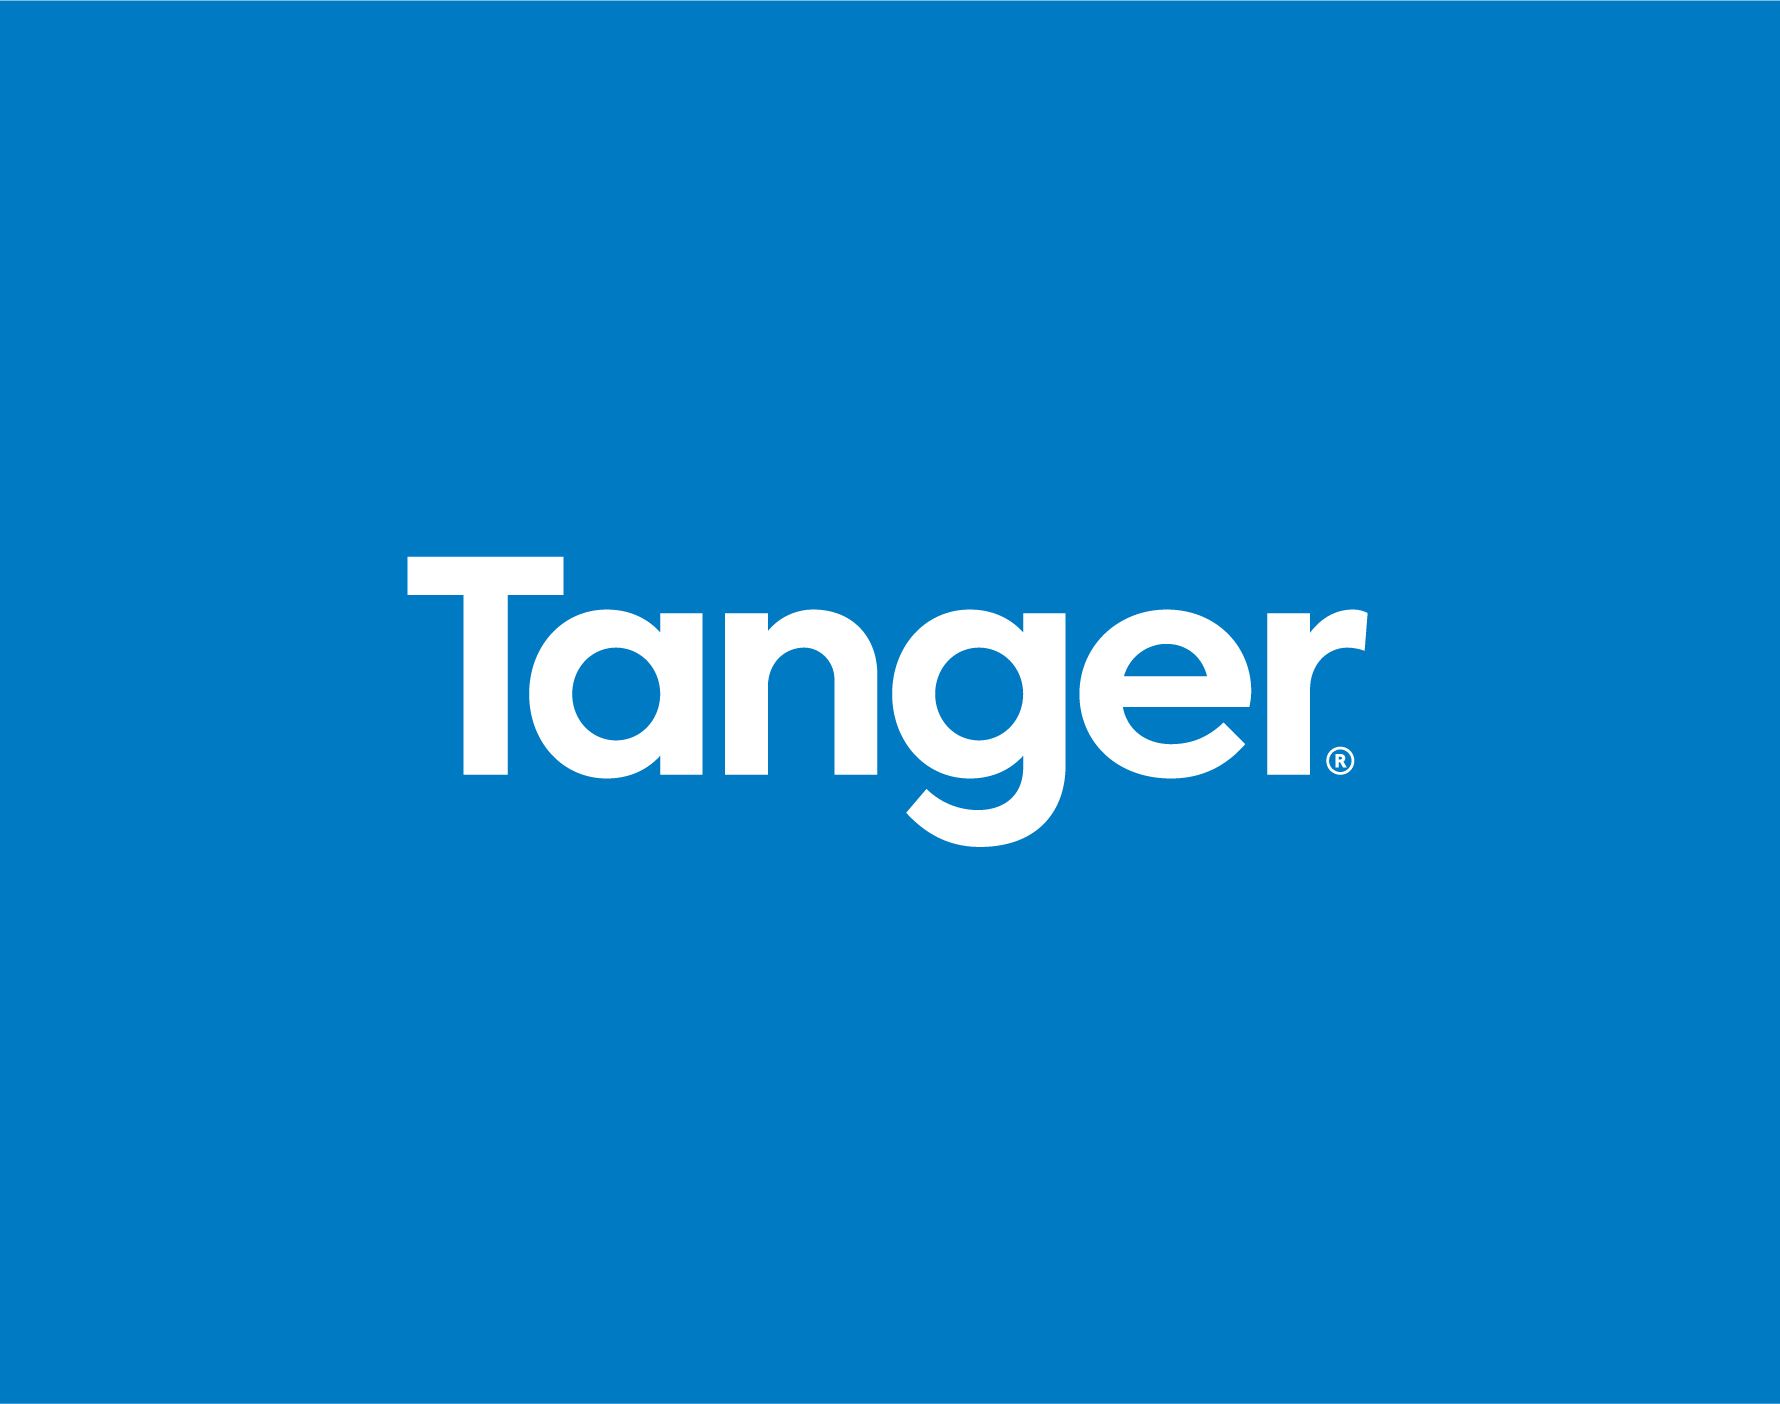 Tanger_OAB_background_bcrf.png